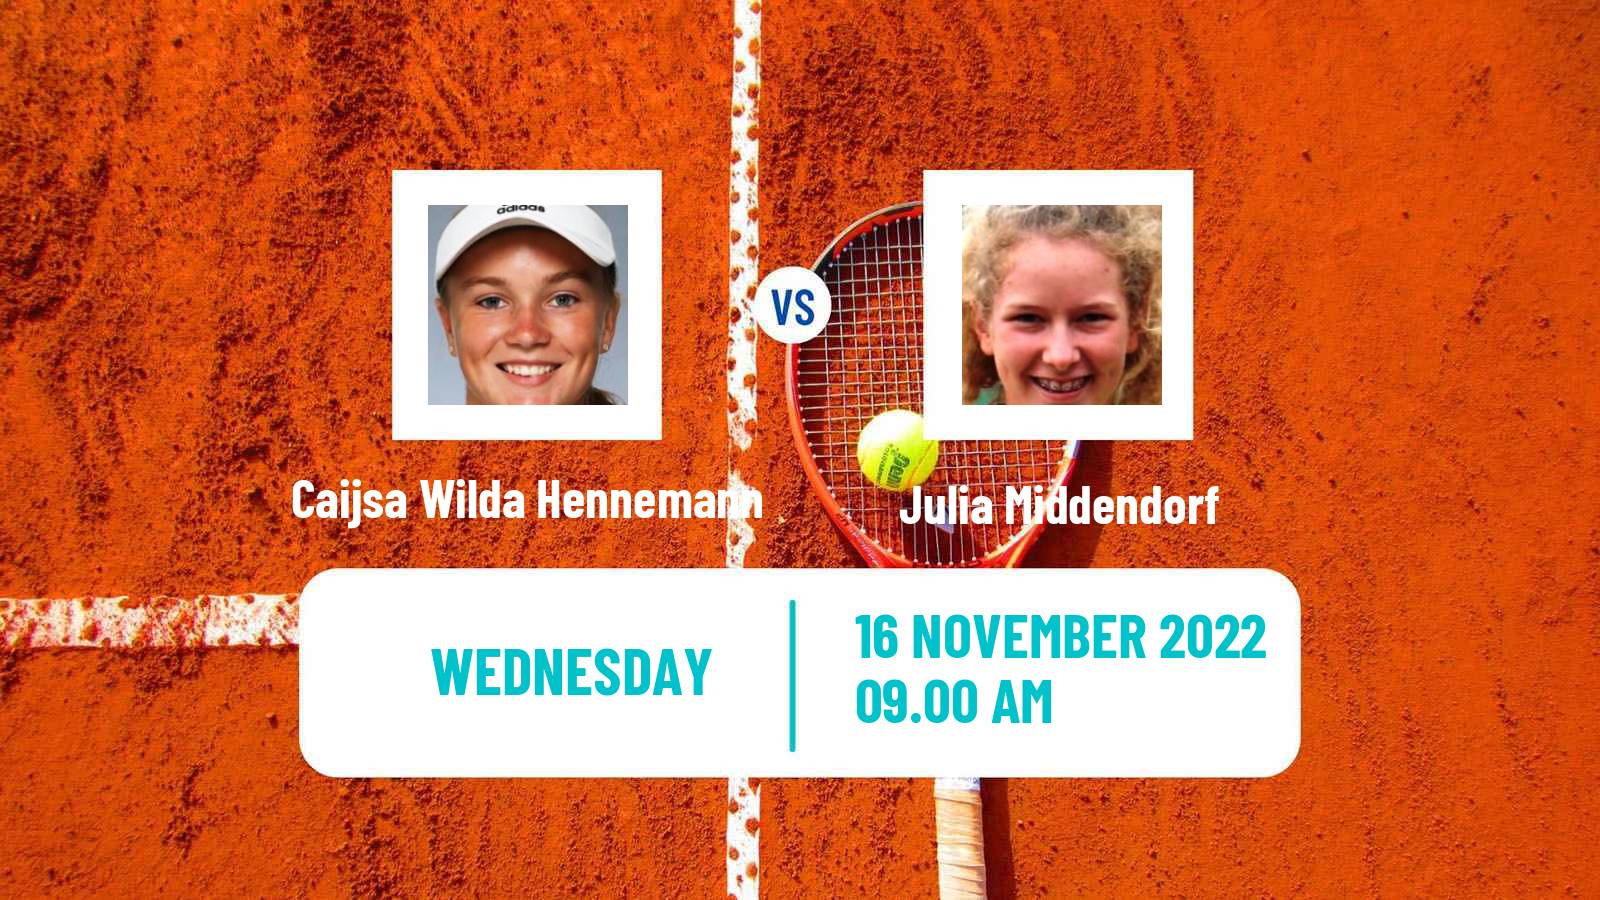 Tennis ITF Tournaments Caijsa Wilda Hennemann - Julia Middendorf